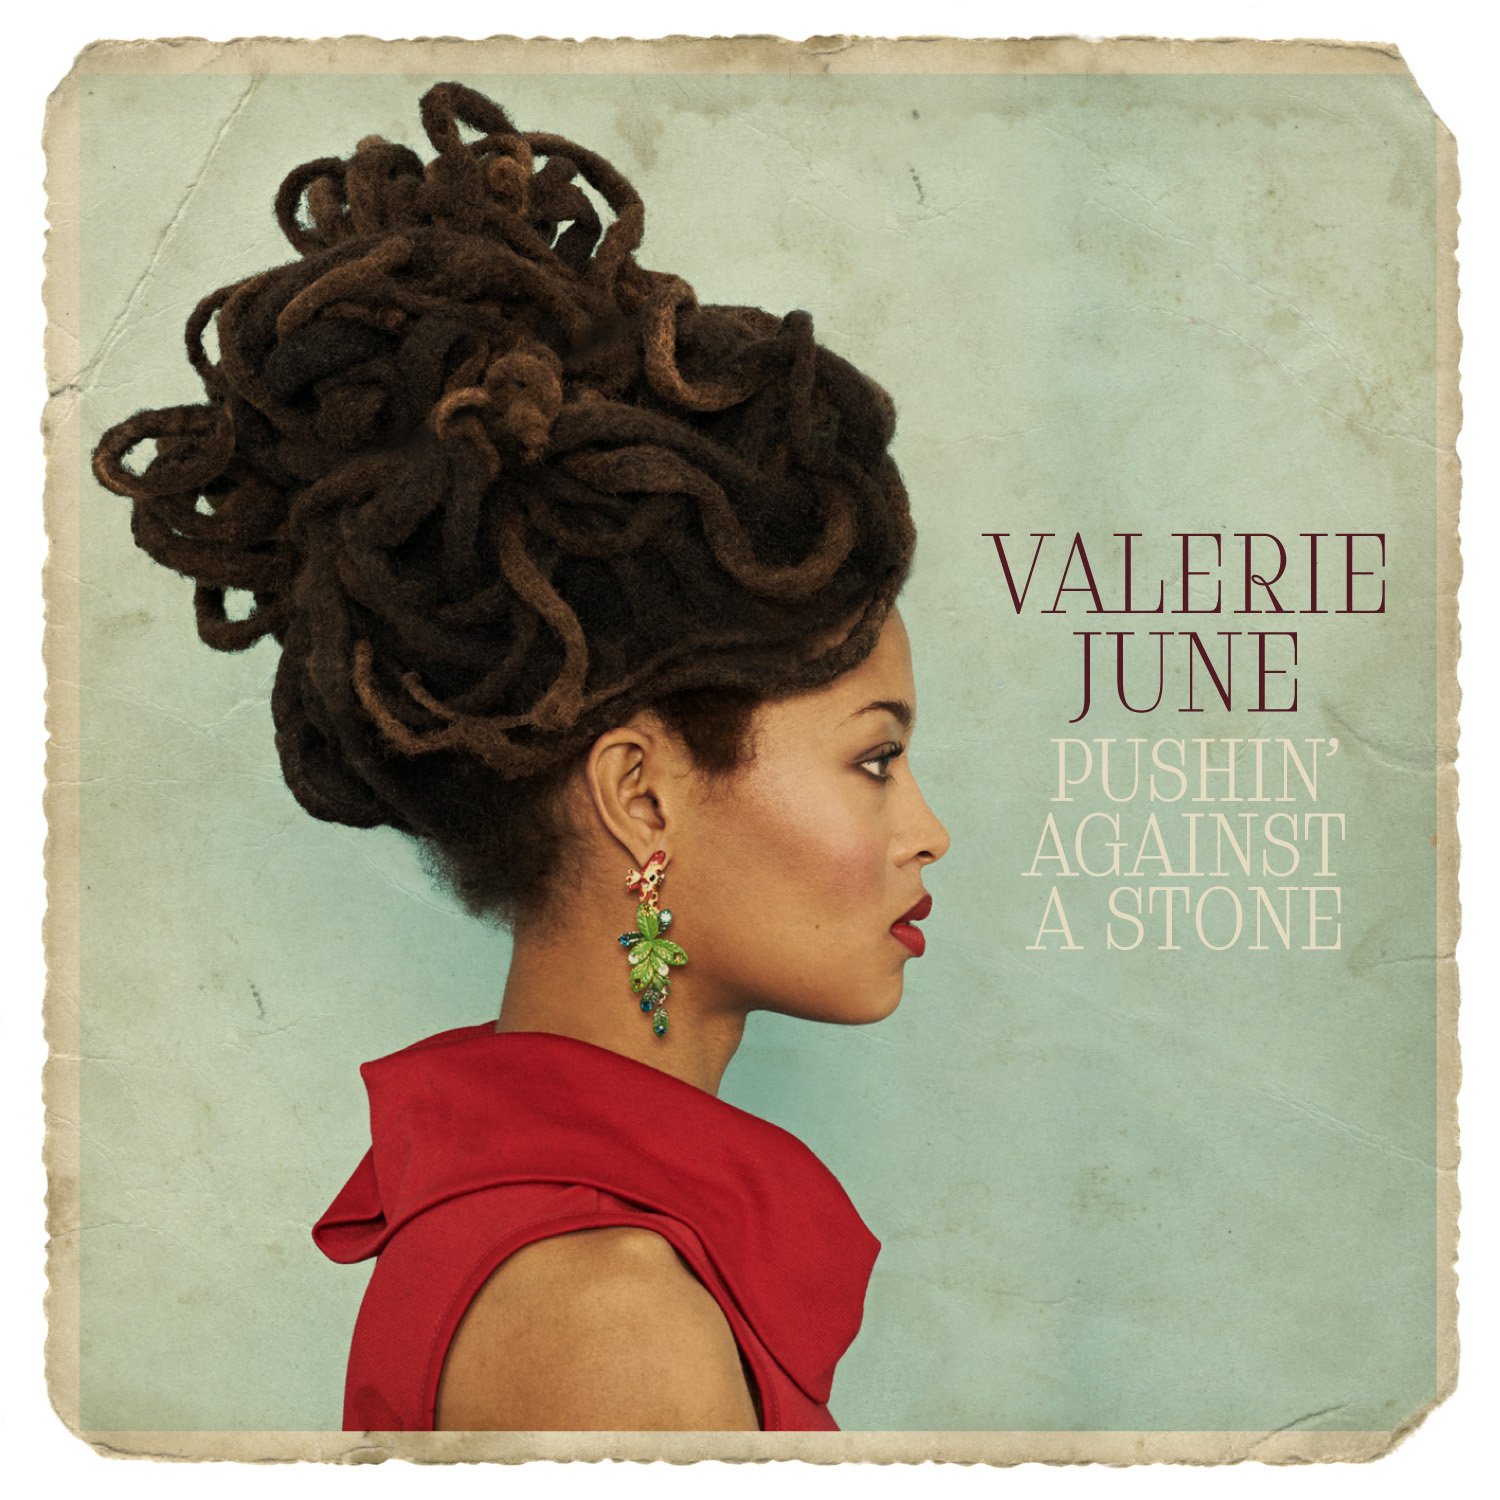 Valerie June - Folk de Tennessee 81yjdca8VvL._AA1500_